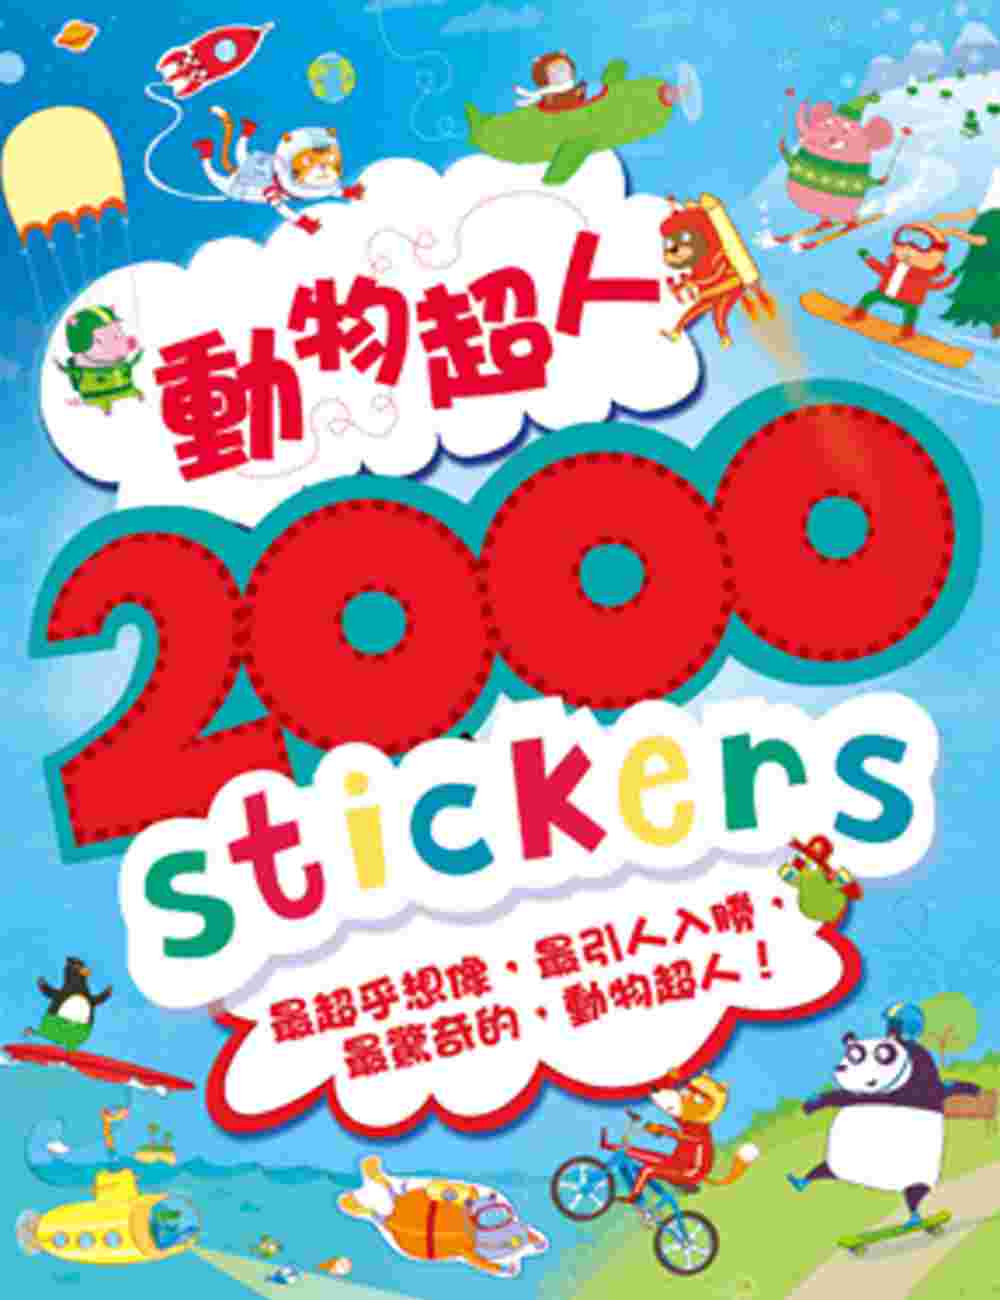 2000 stickers：動物超人